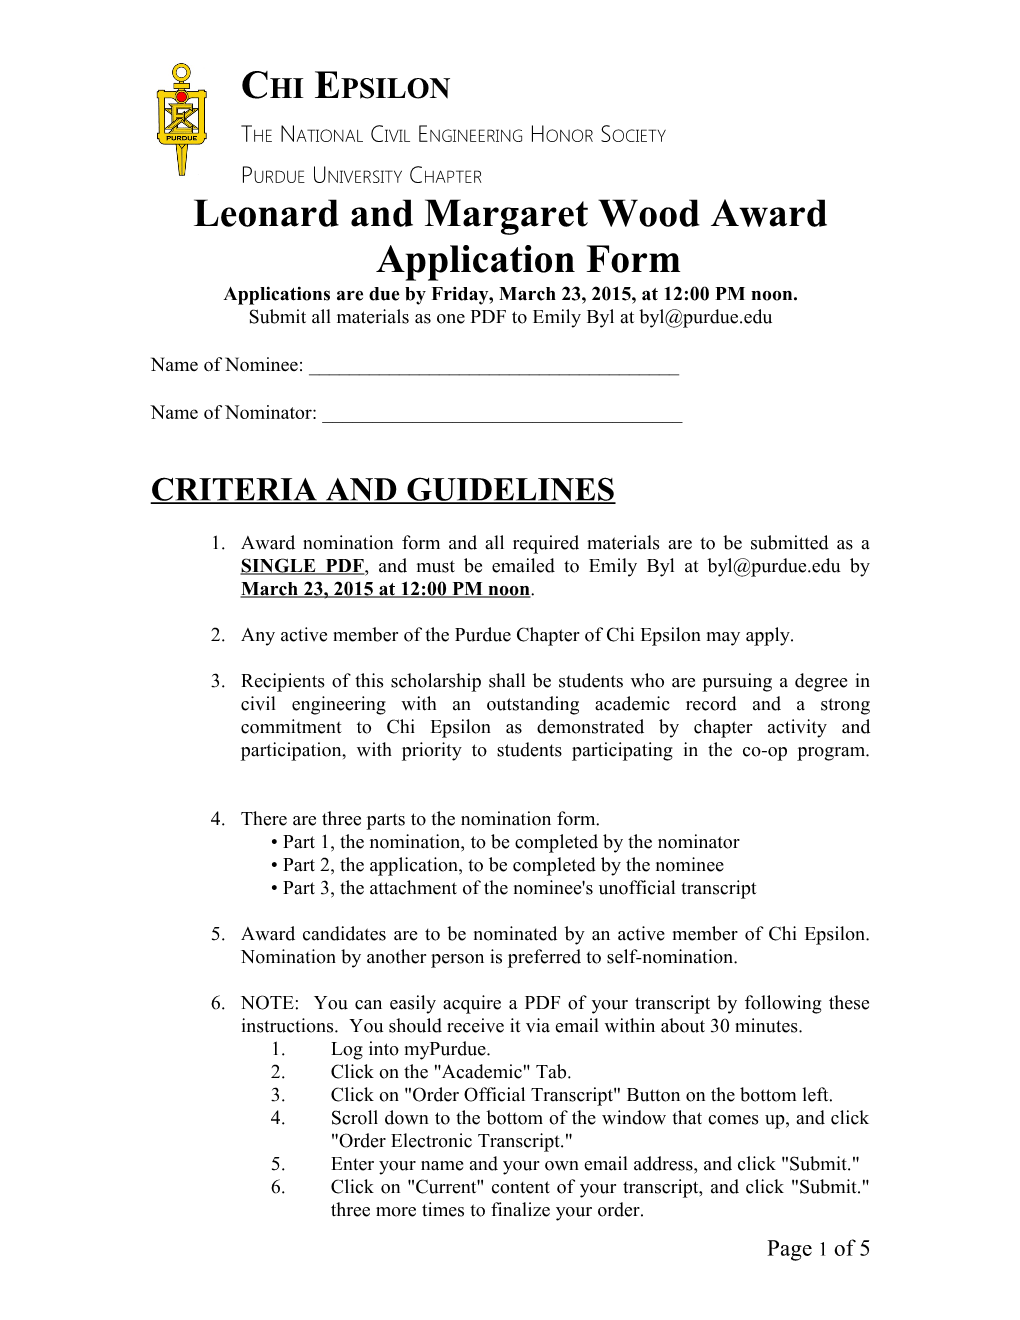 Wood Award Nomination